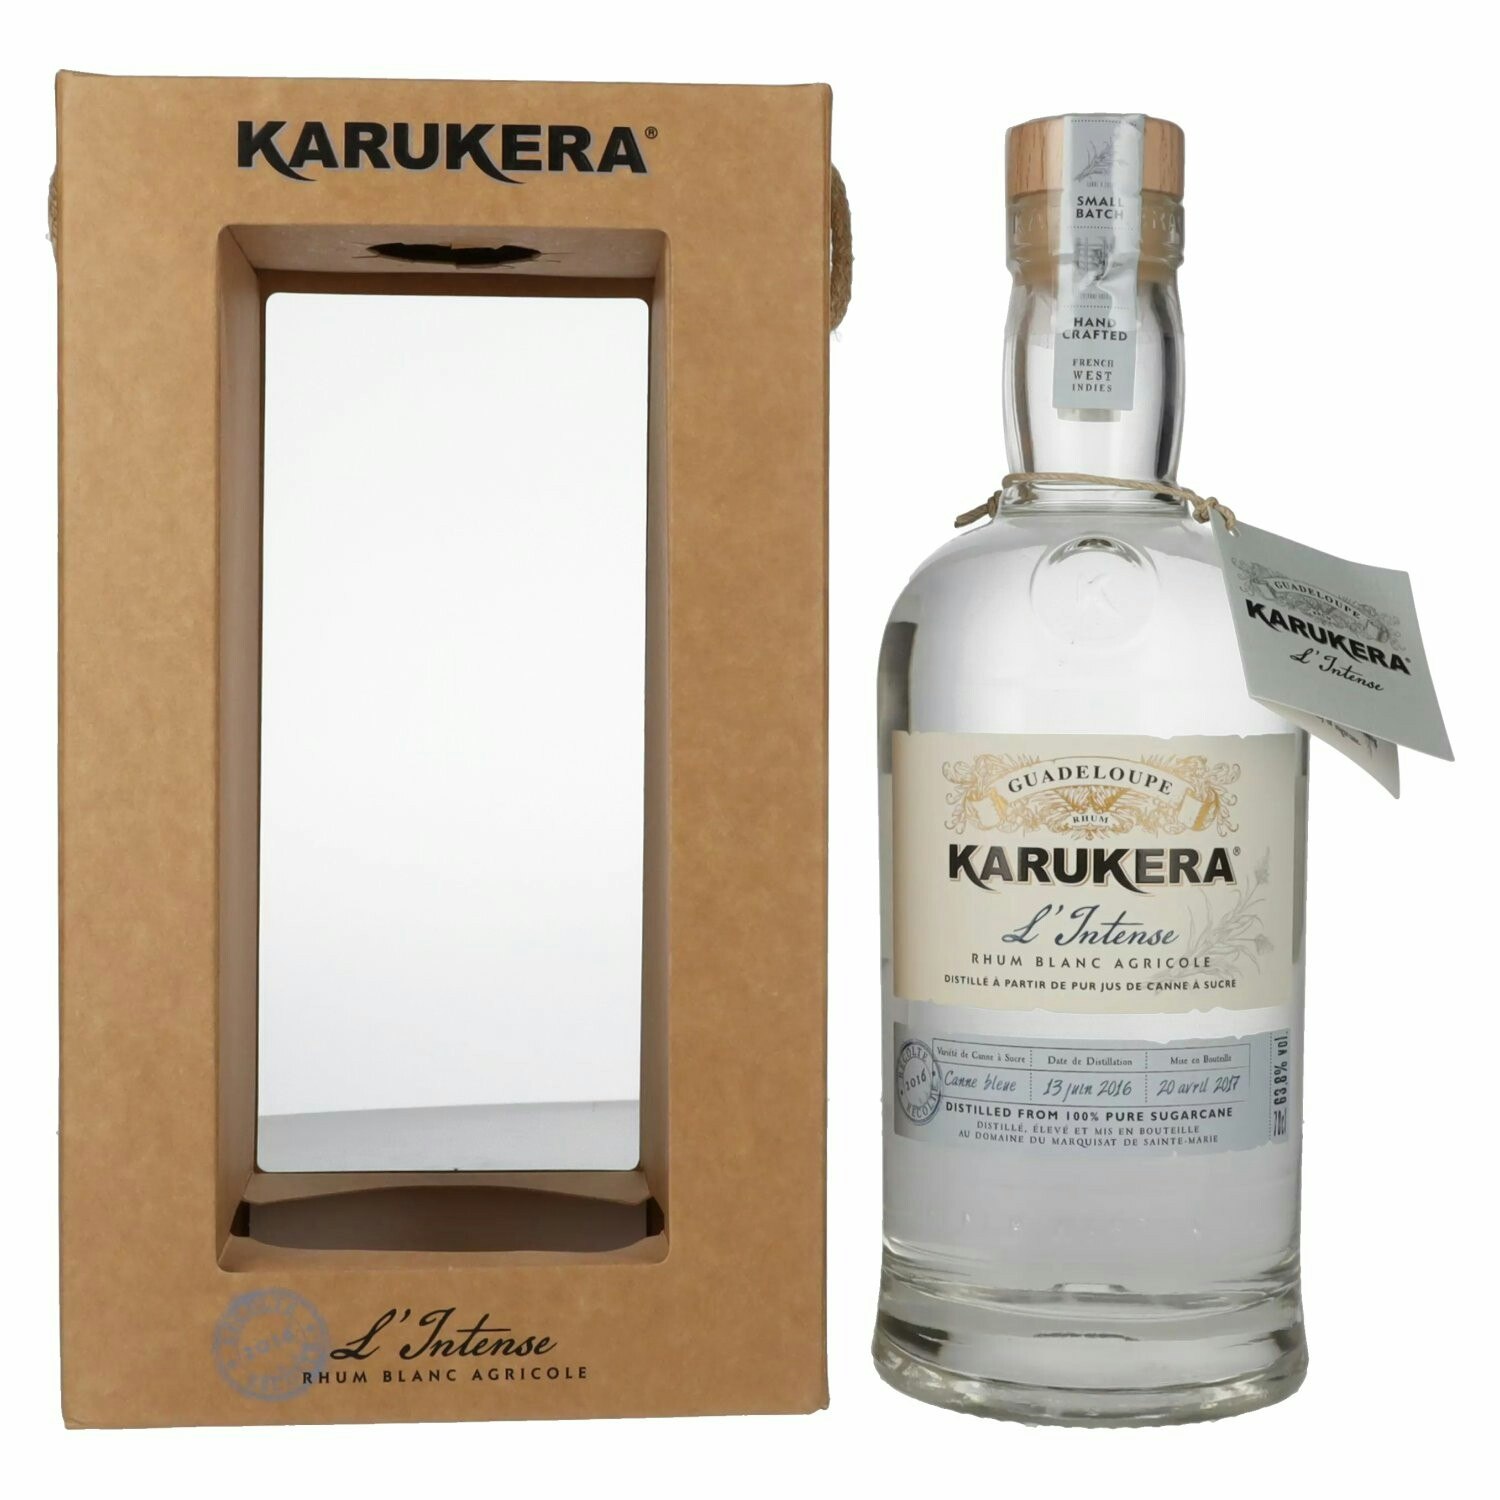 Karukera L'Intense Rhum Blanc Agricole 63,8% Vol. 0,7l in Giftbox